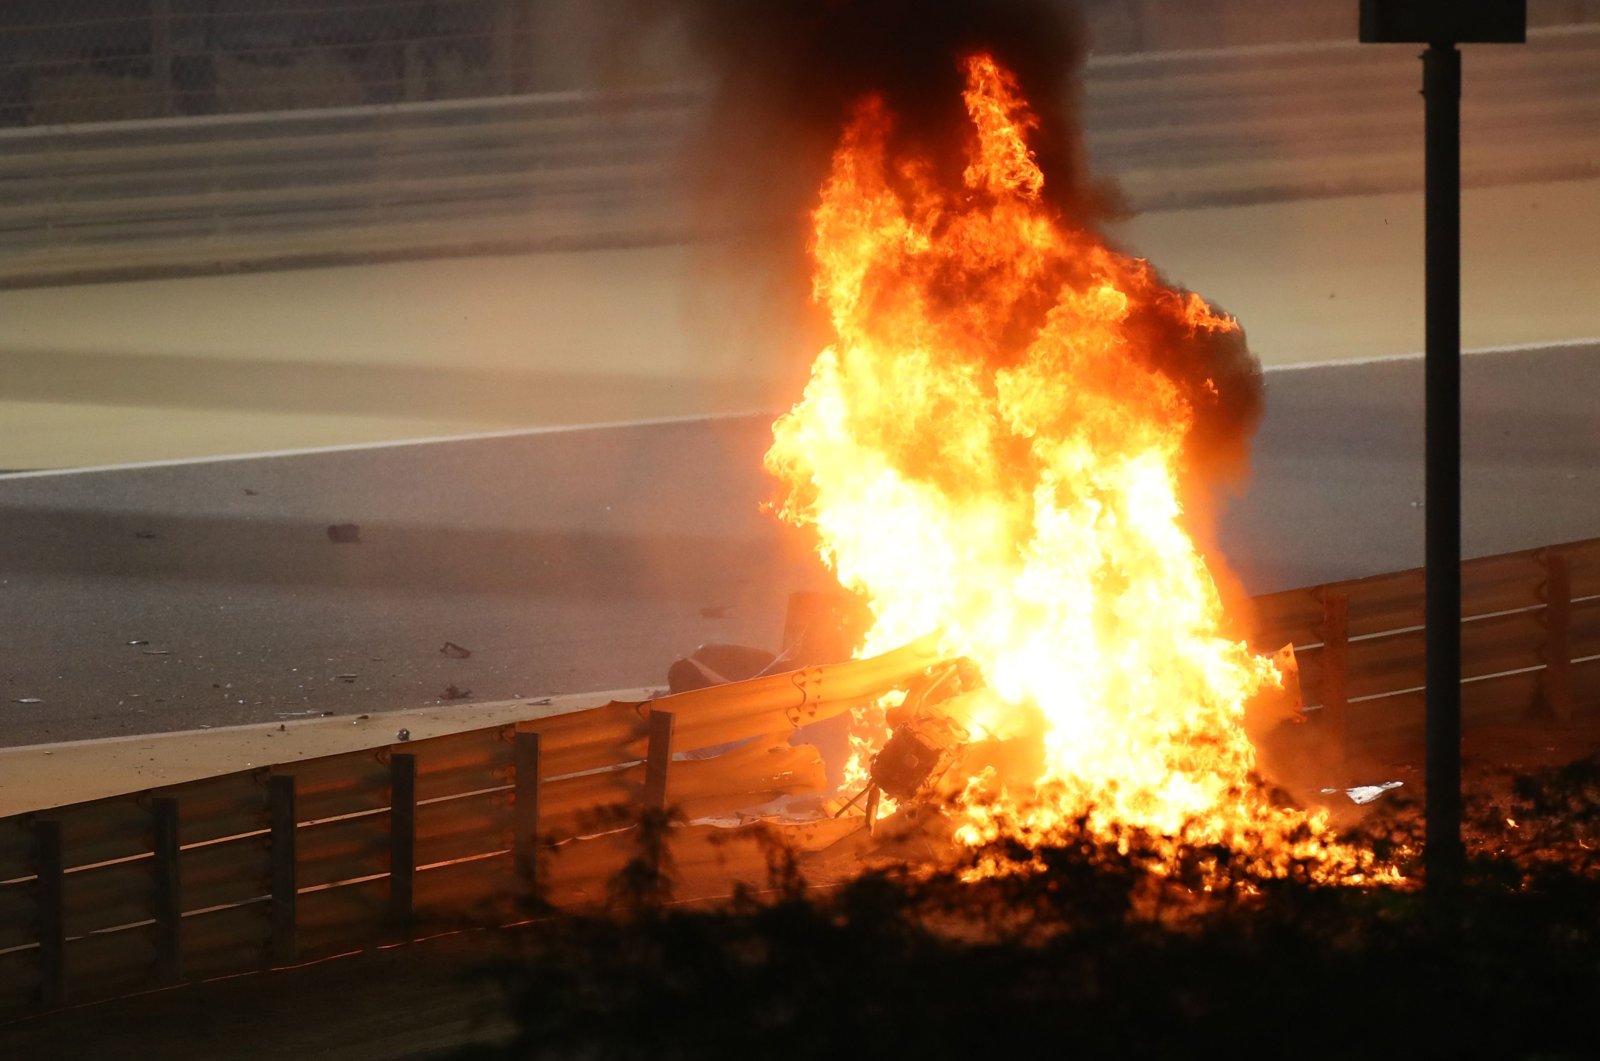 Haas driver Romain Grosjean's car burns after an accident at the Formula 1 Bahrain Grand Prix at the Bahrain International Circuit, in Sakhir, Bahrain, Nov. 29, 2020. (AFP Photo)